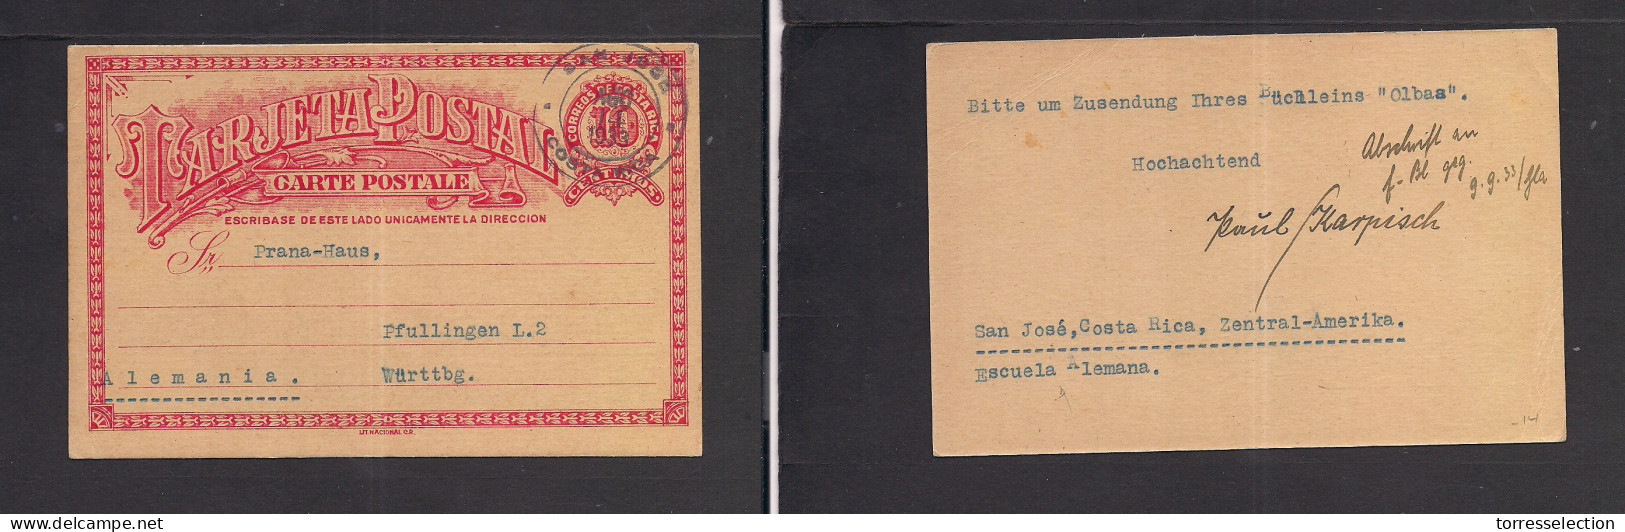 COSTA RICA. 1933 (14 Aug) San Jose - Germany, Pfullingen. 10c Red Stat Card. Fine Used. XSALE. - Costa Rica